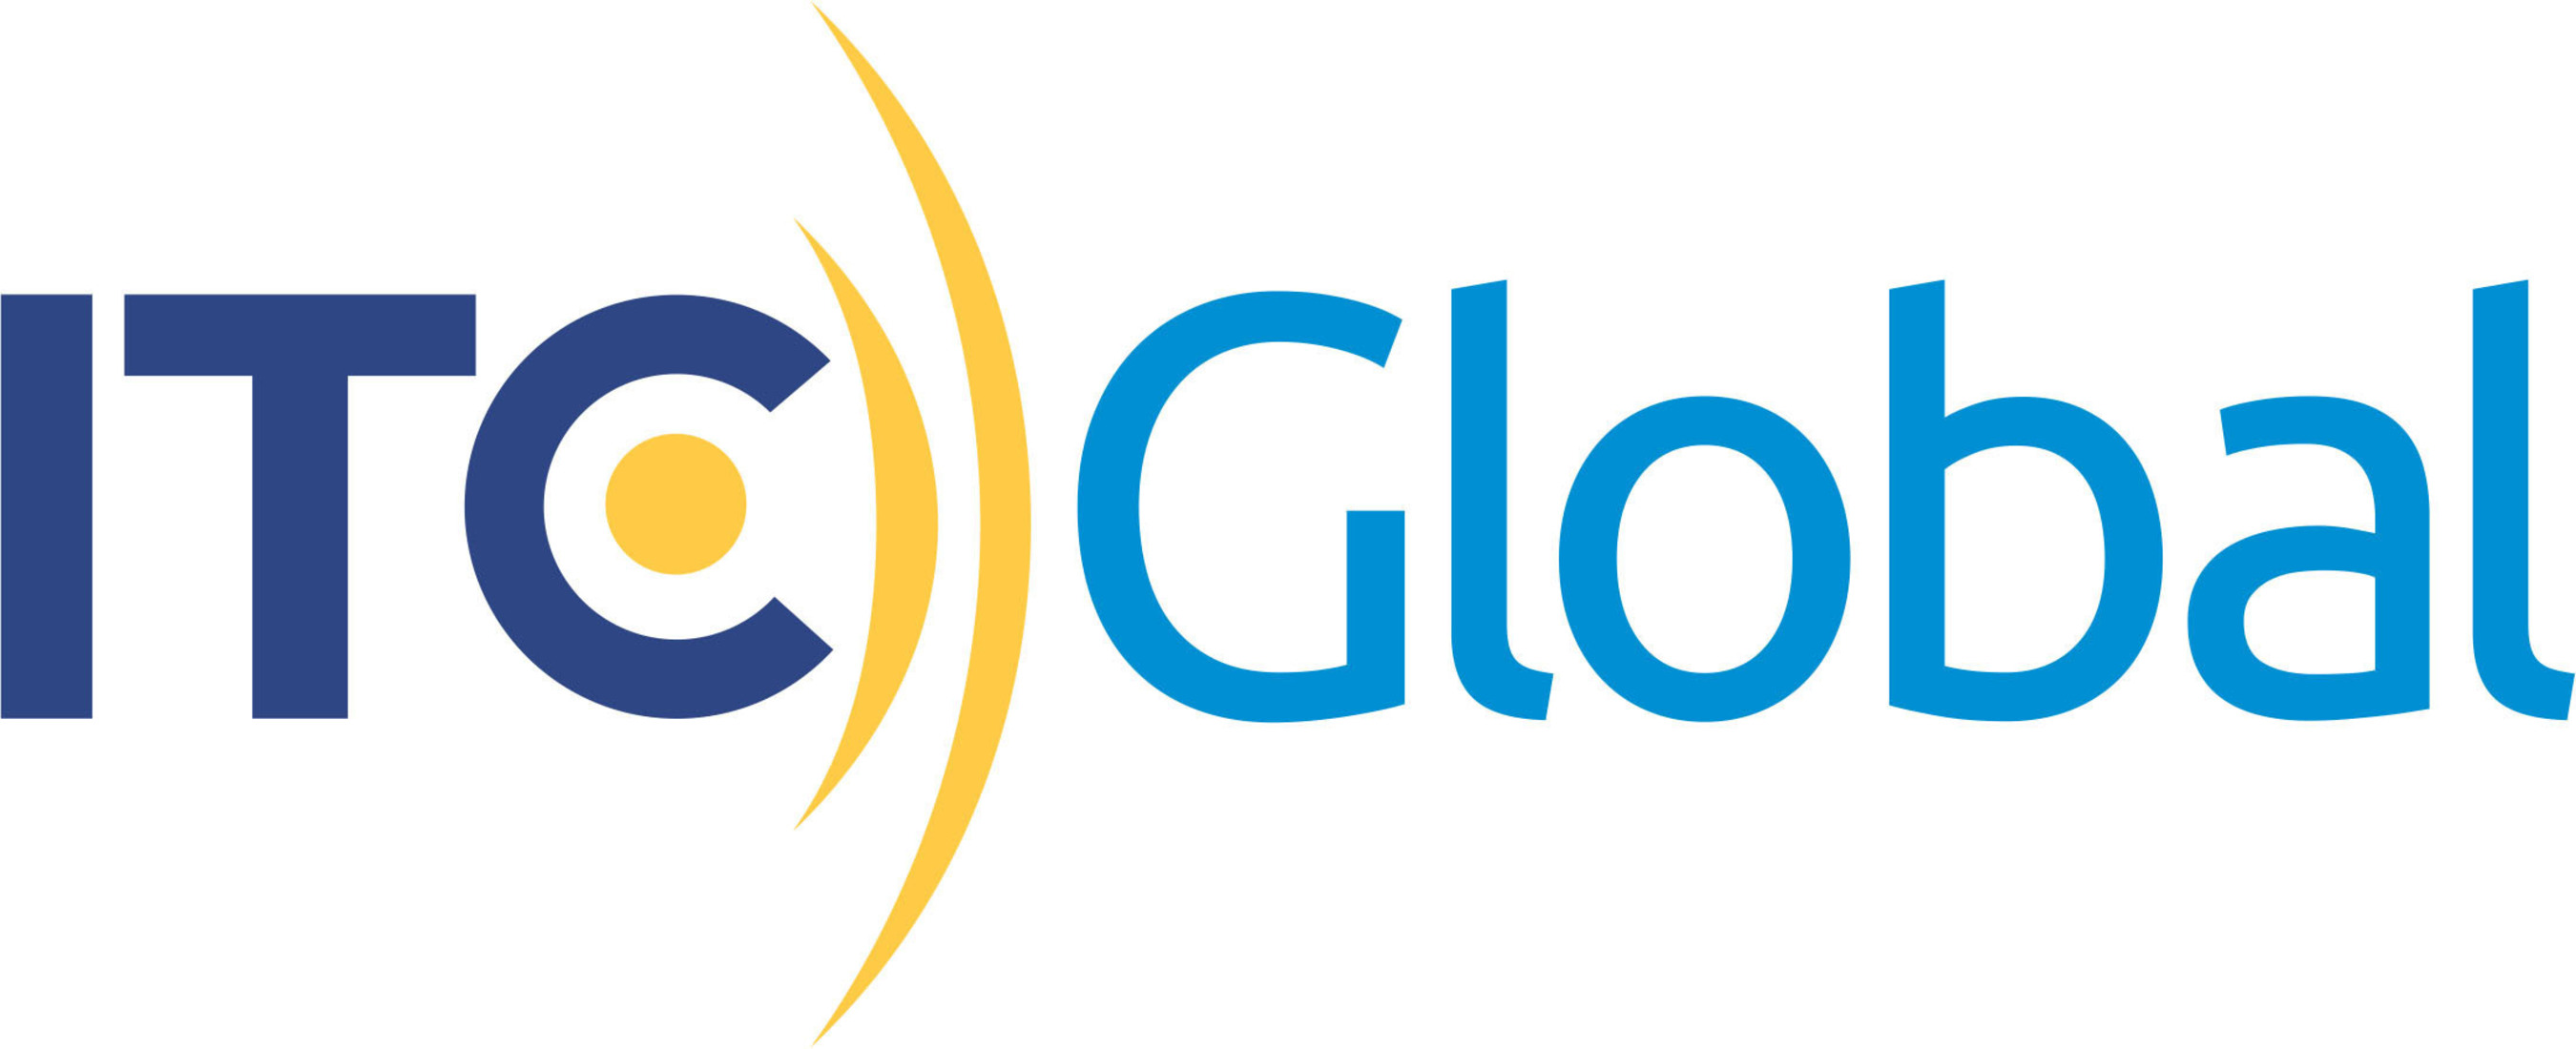 ITC Global Logo.